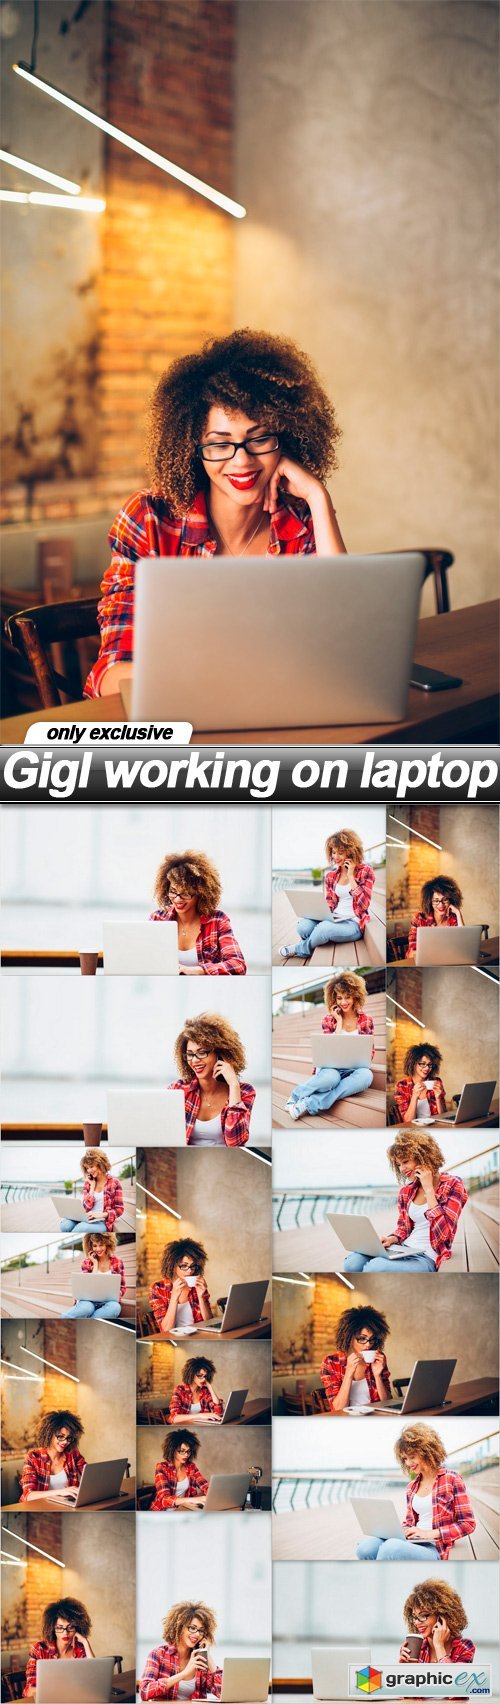 Gigl working on laptop - 18 UHQ JPEG